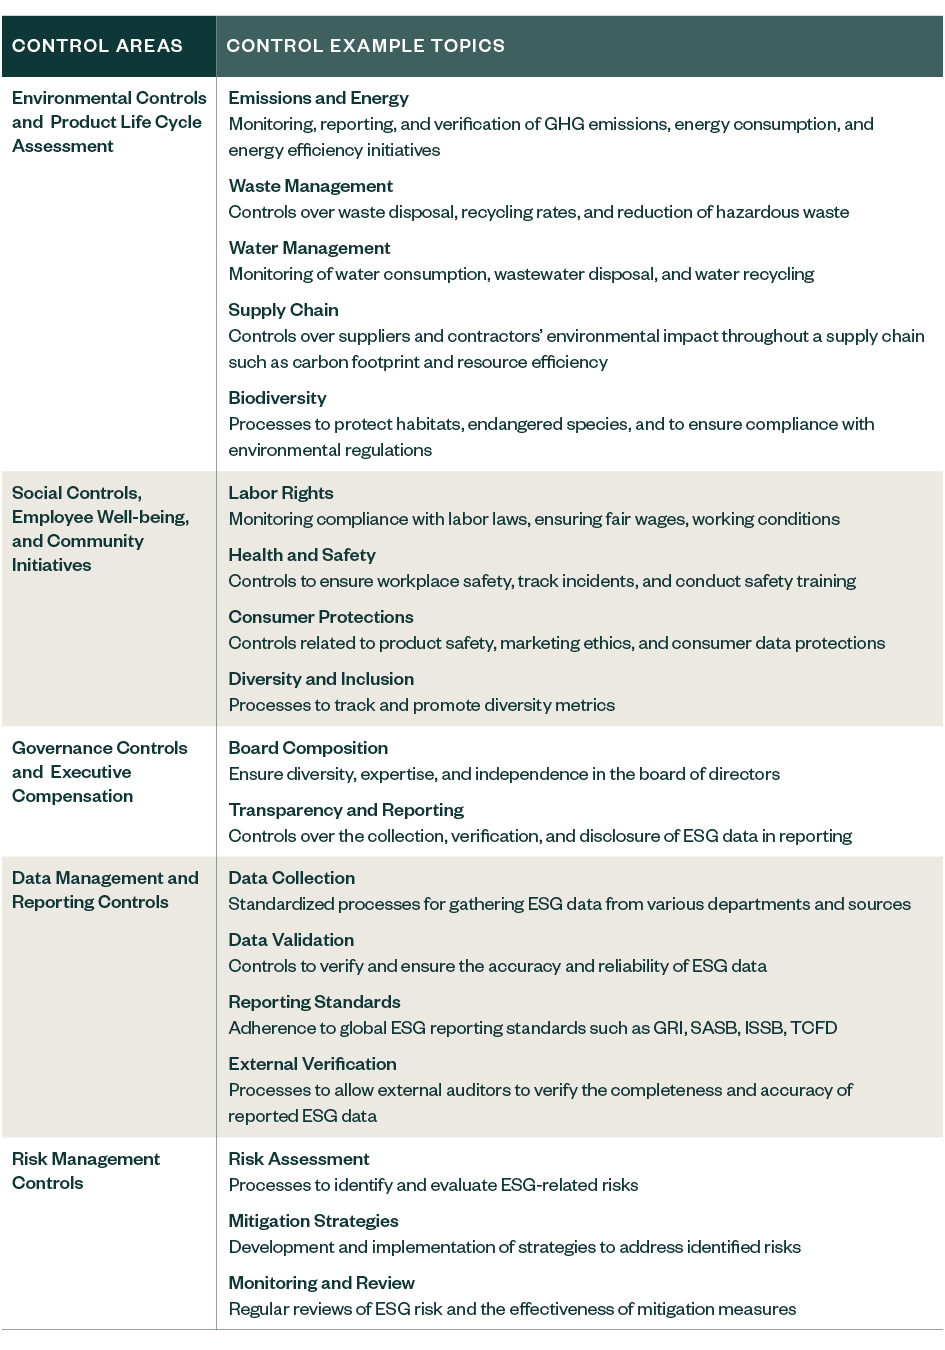 A table describing topics governed by ESG controls